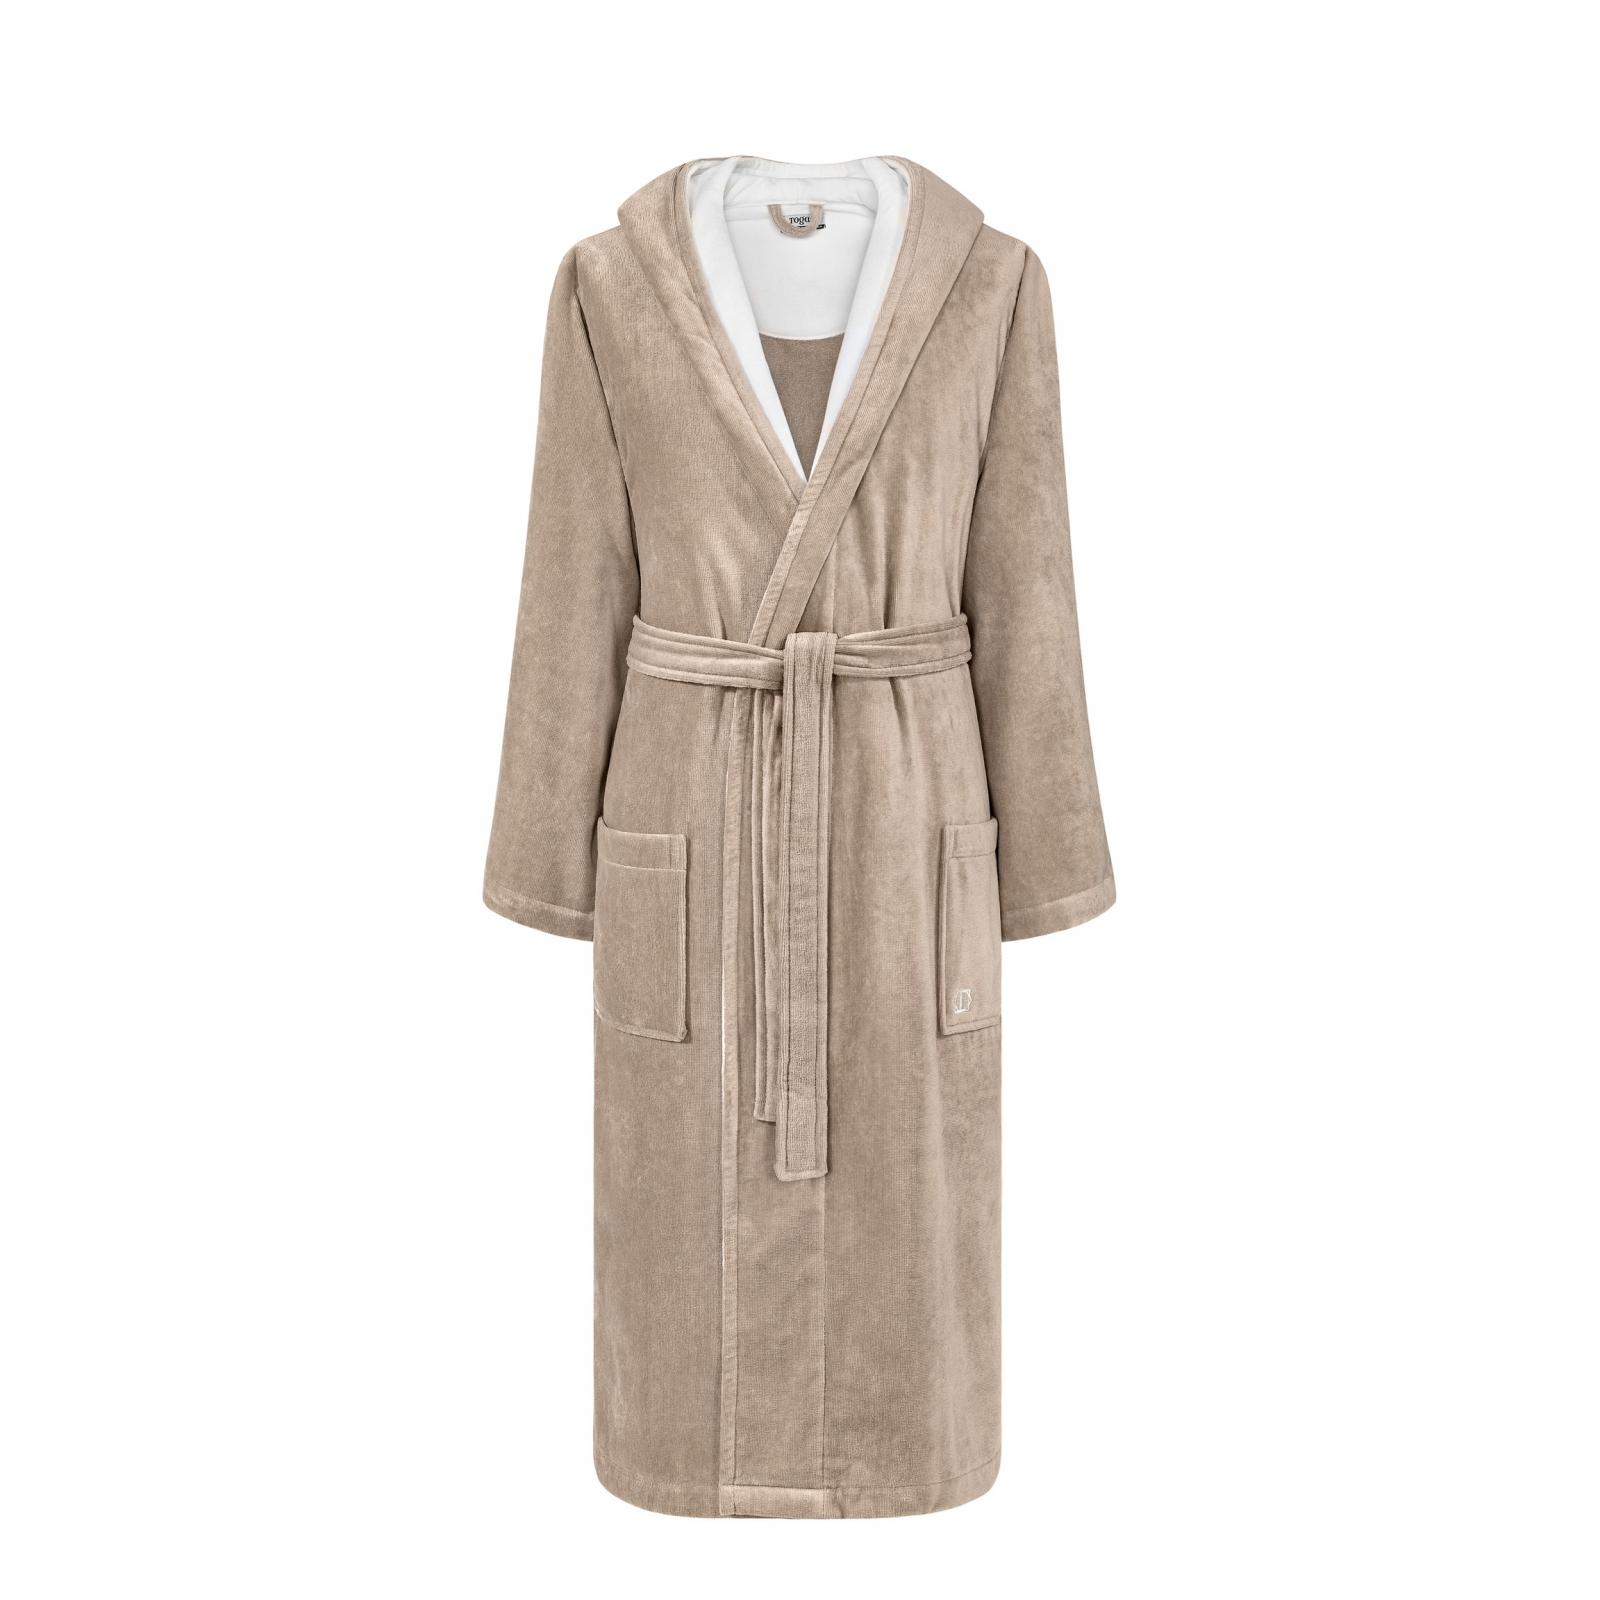 Халат Togas Арт Лайн коричневый с белым L(50) халат кимоно короткое togas наоми чёрное l 48